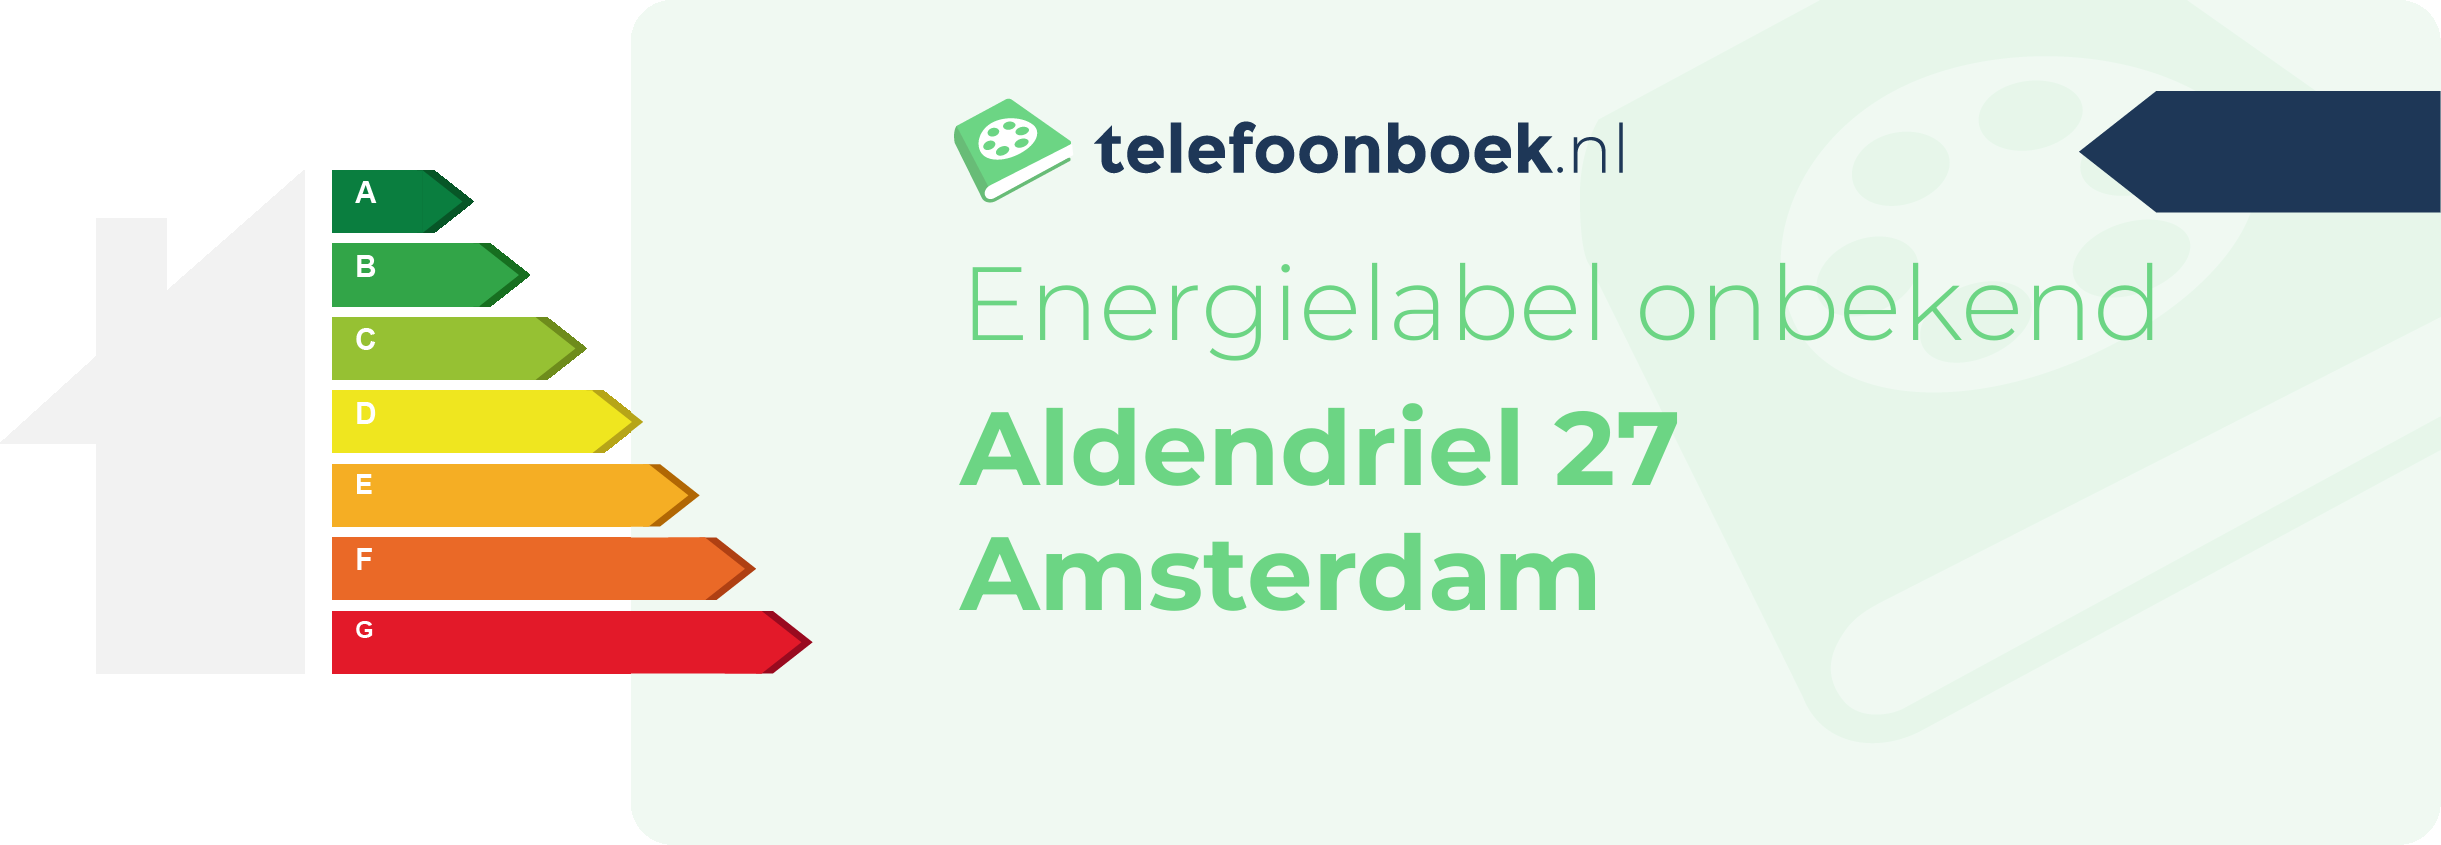 Energielabel Aldendriel 27 Amsterdam